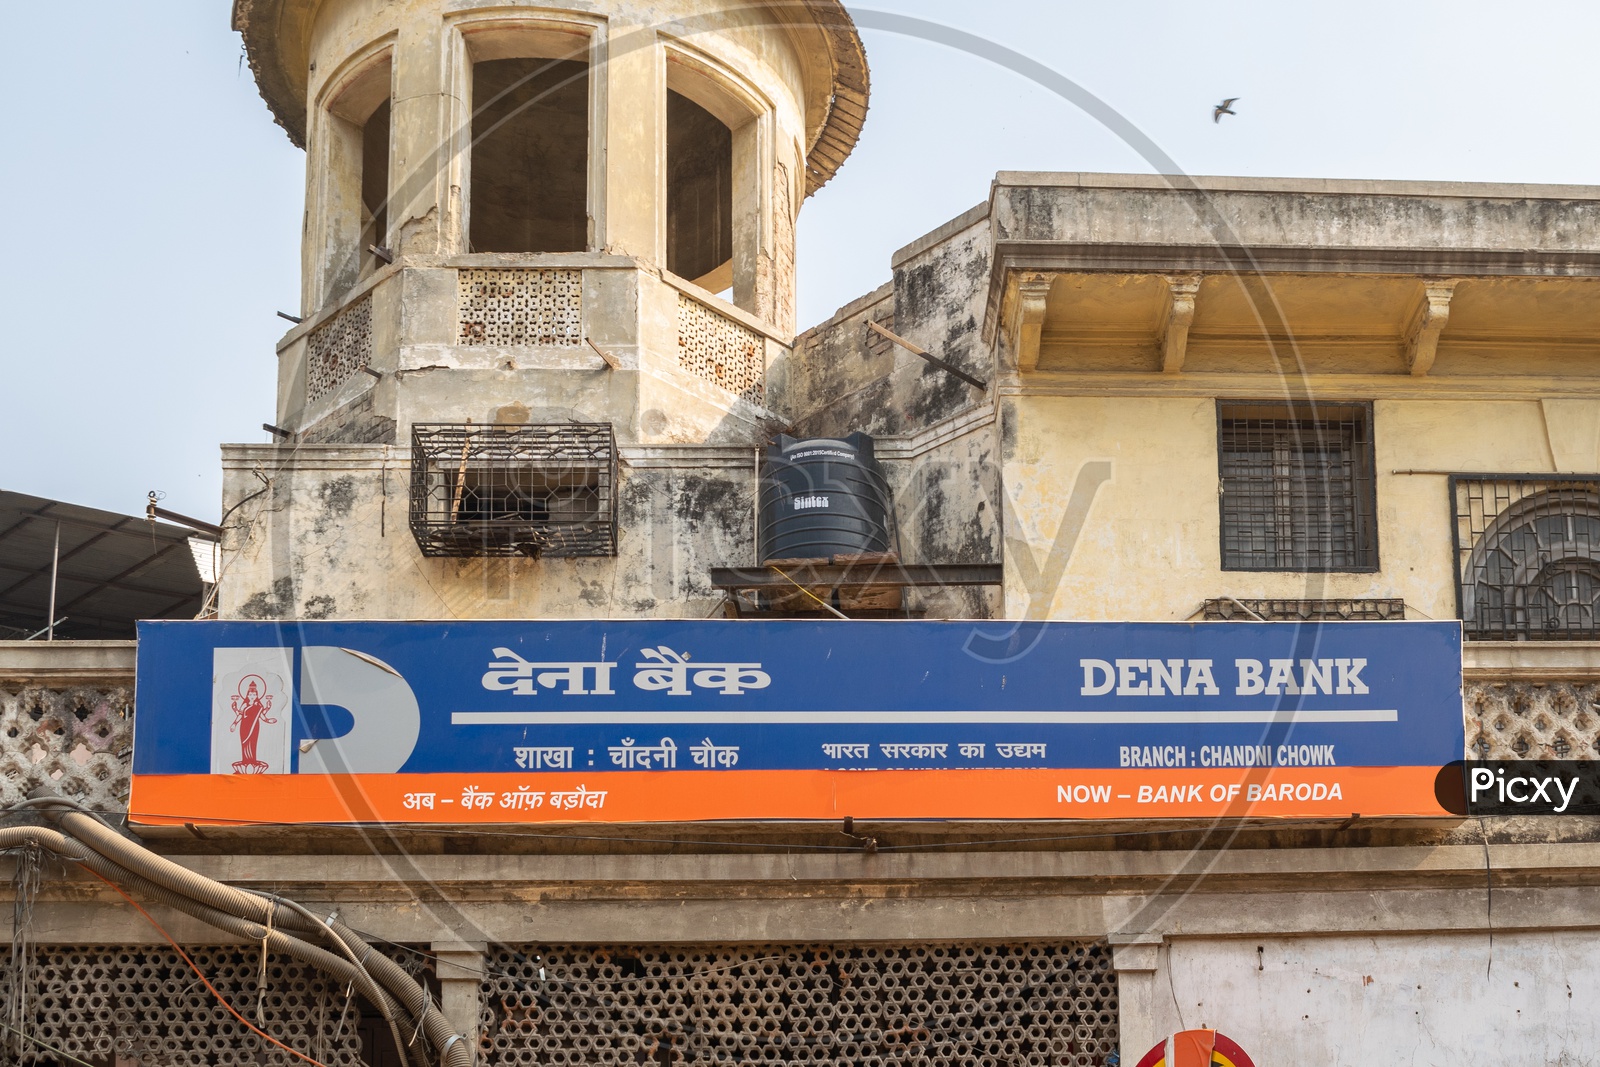 Merger of Dena Bank and Vijaya Bank with Bank of Baroda